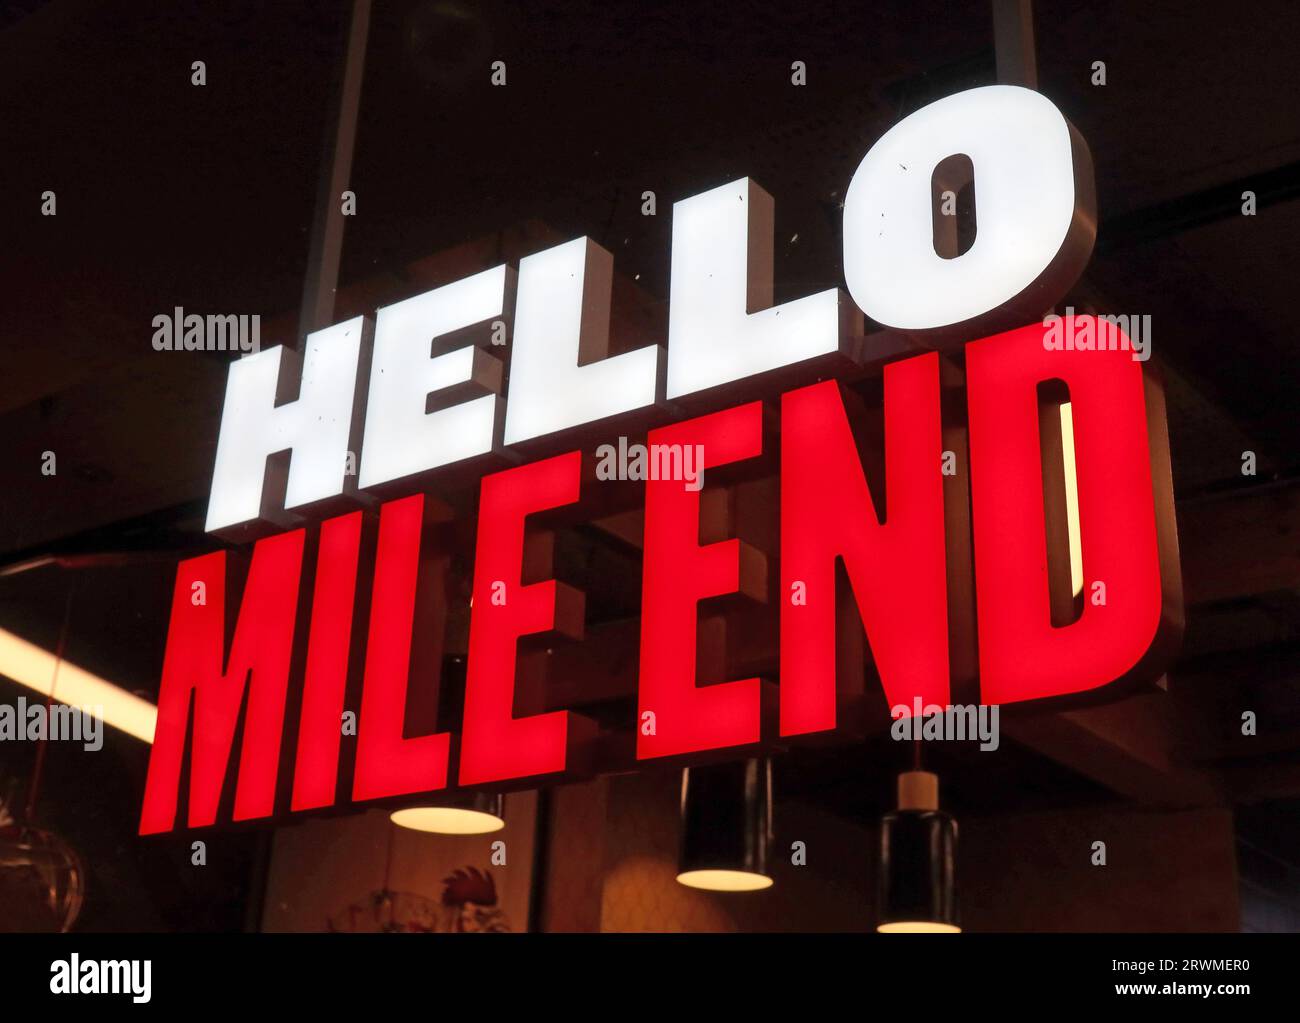 Hello Mile End, KFC, 381 Mile End Rd, Bow, Londres, Angleterre, Royaume-Uni, E3 4QS Banque D'Images